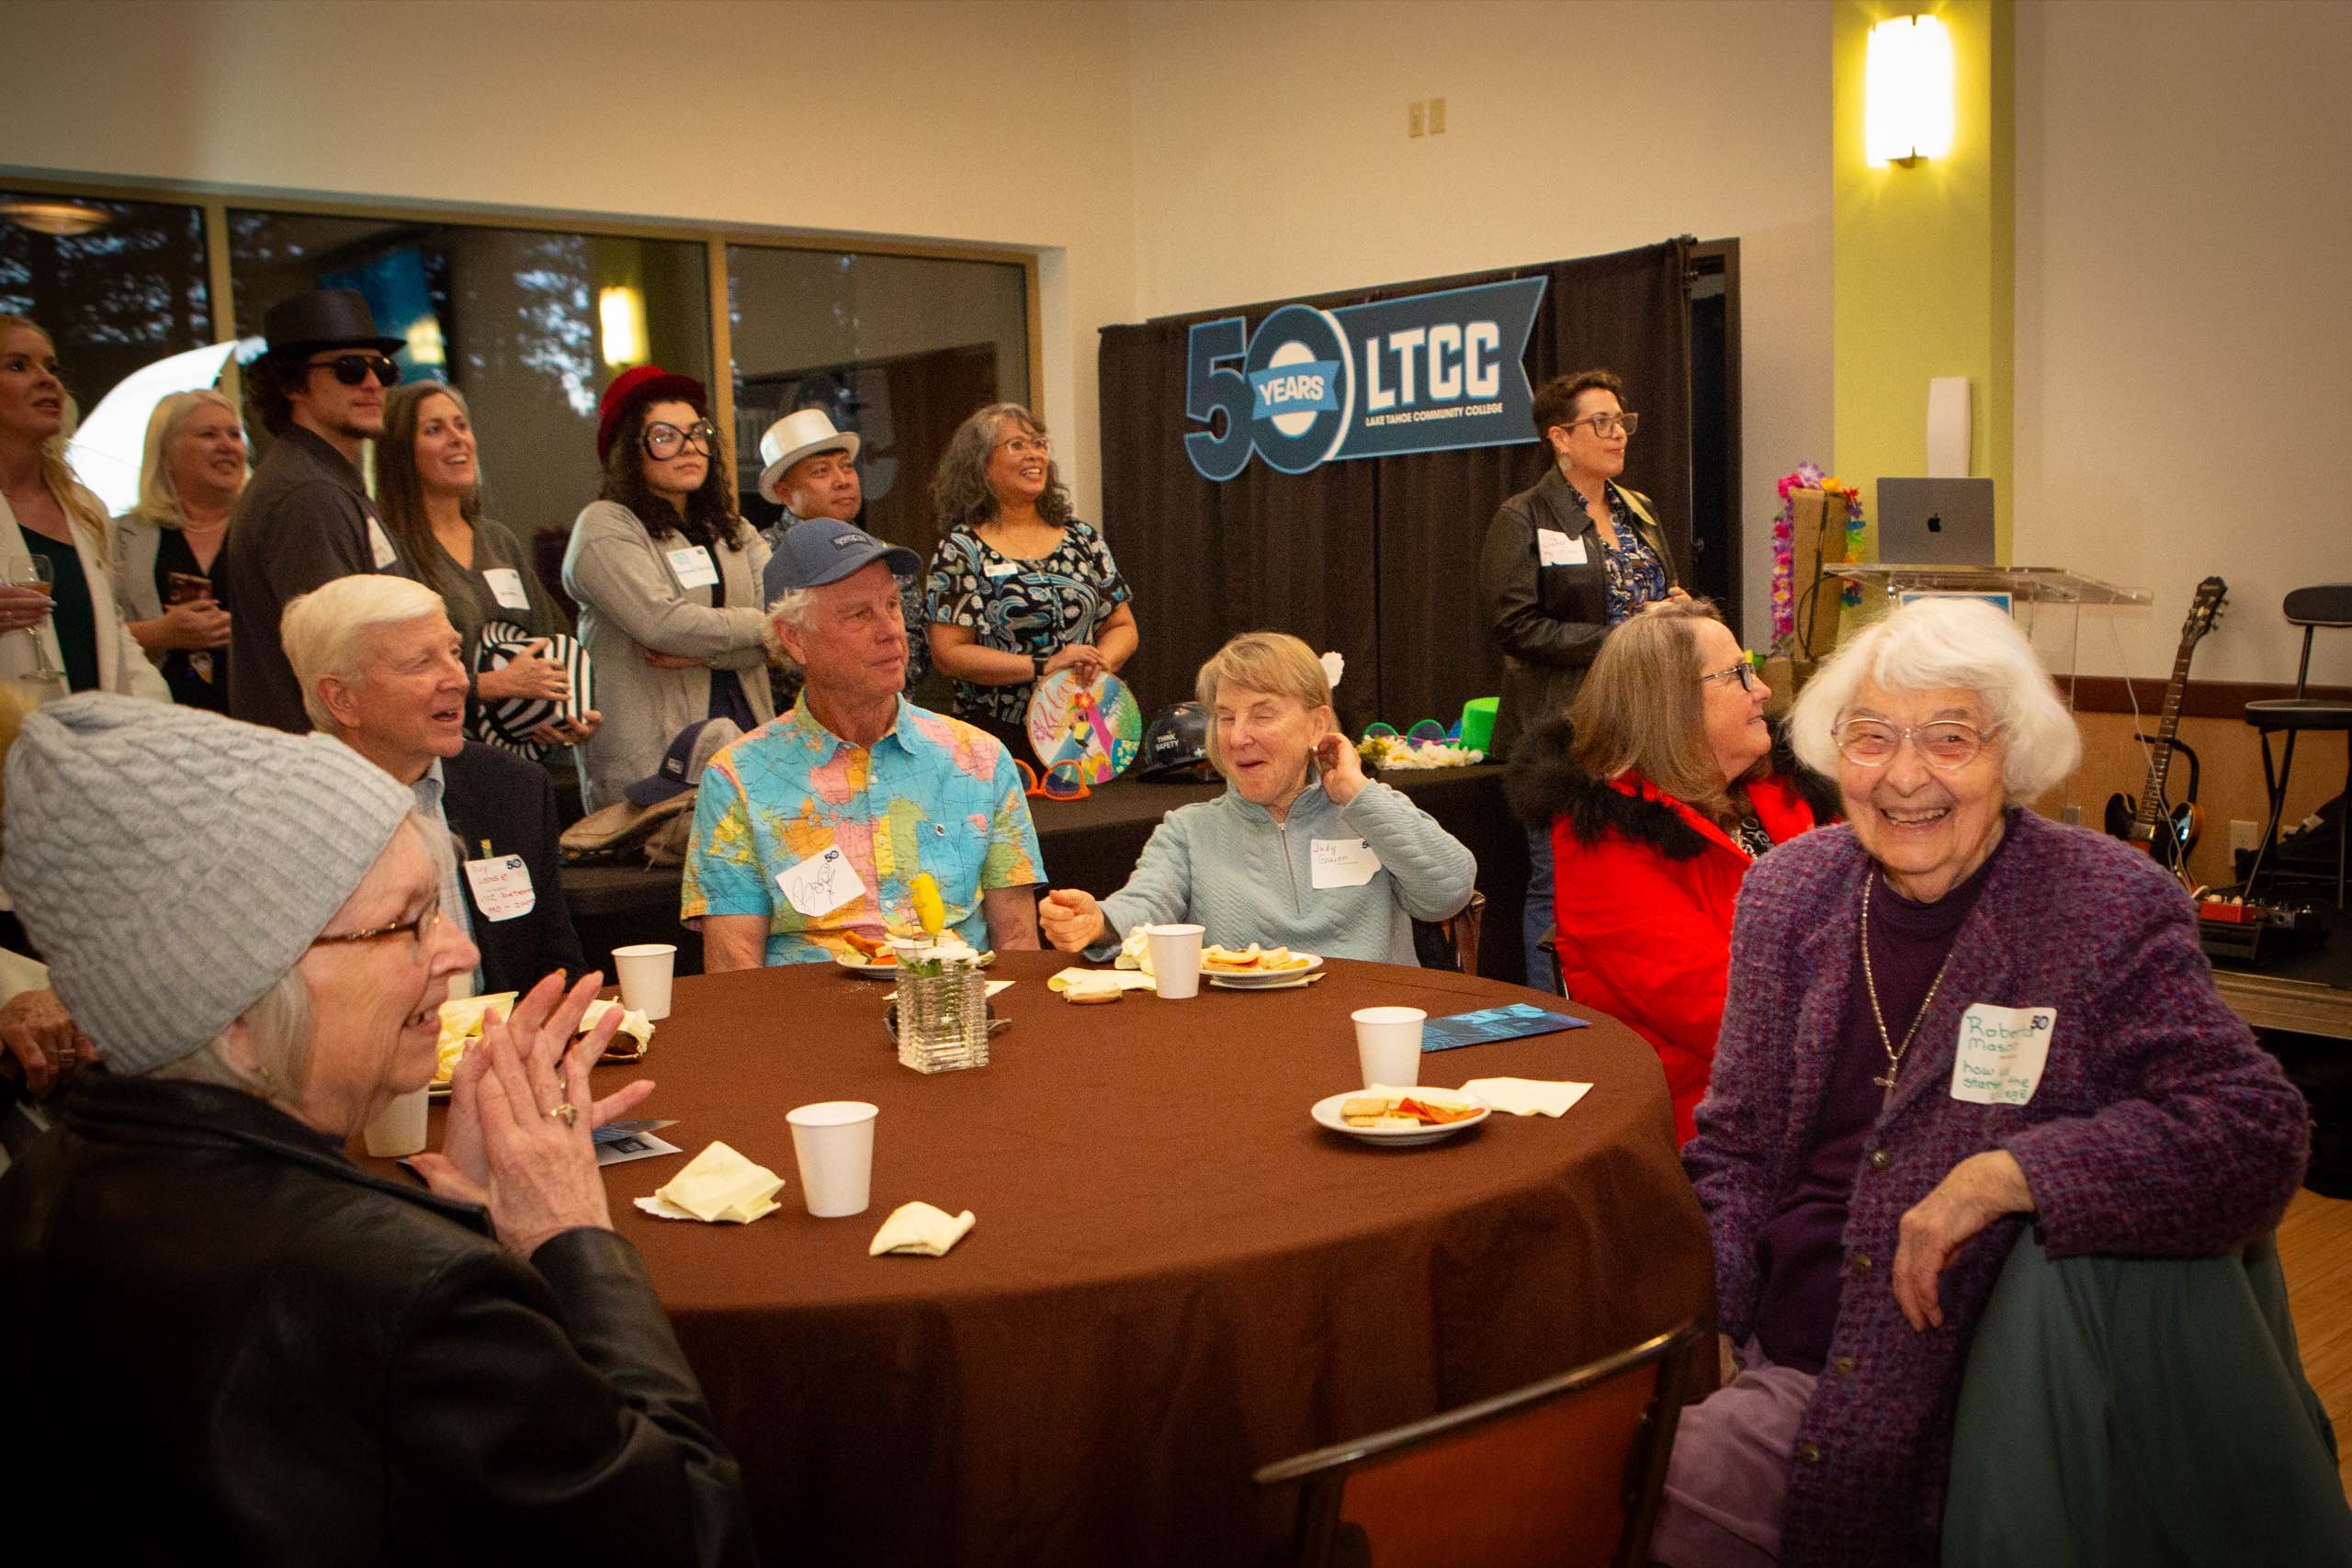 50 years of LTCC: It Takes A Village